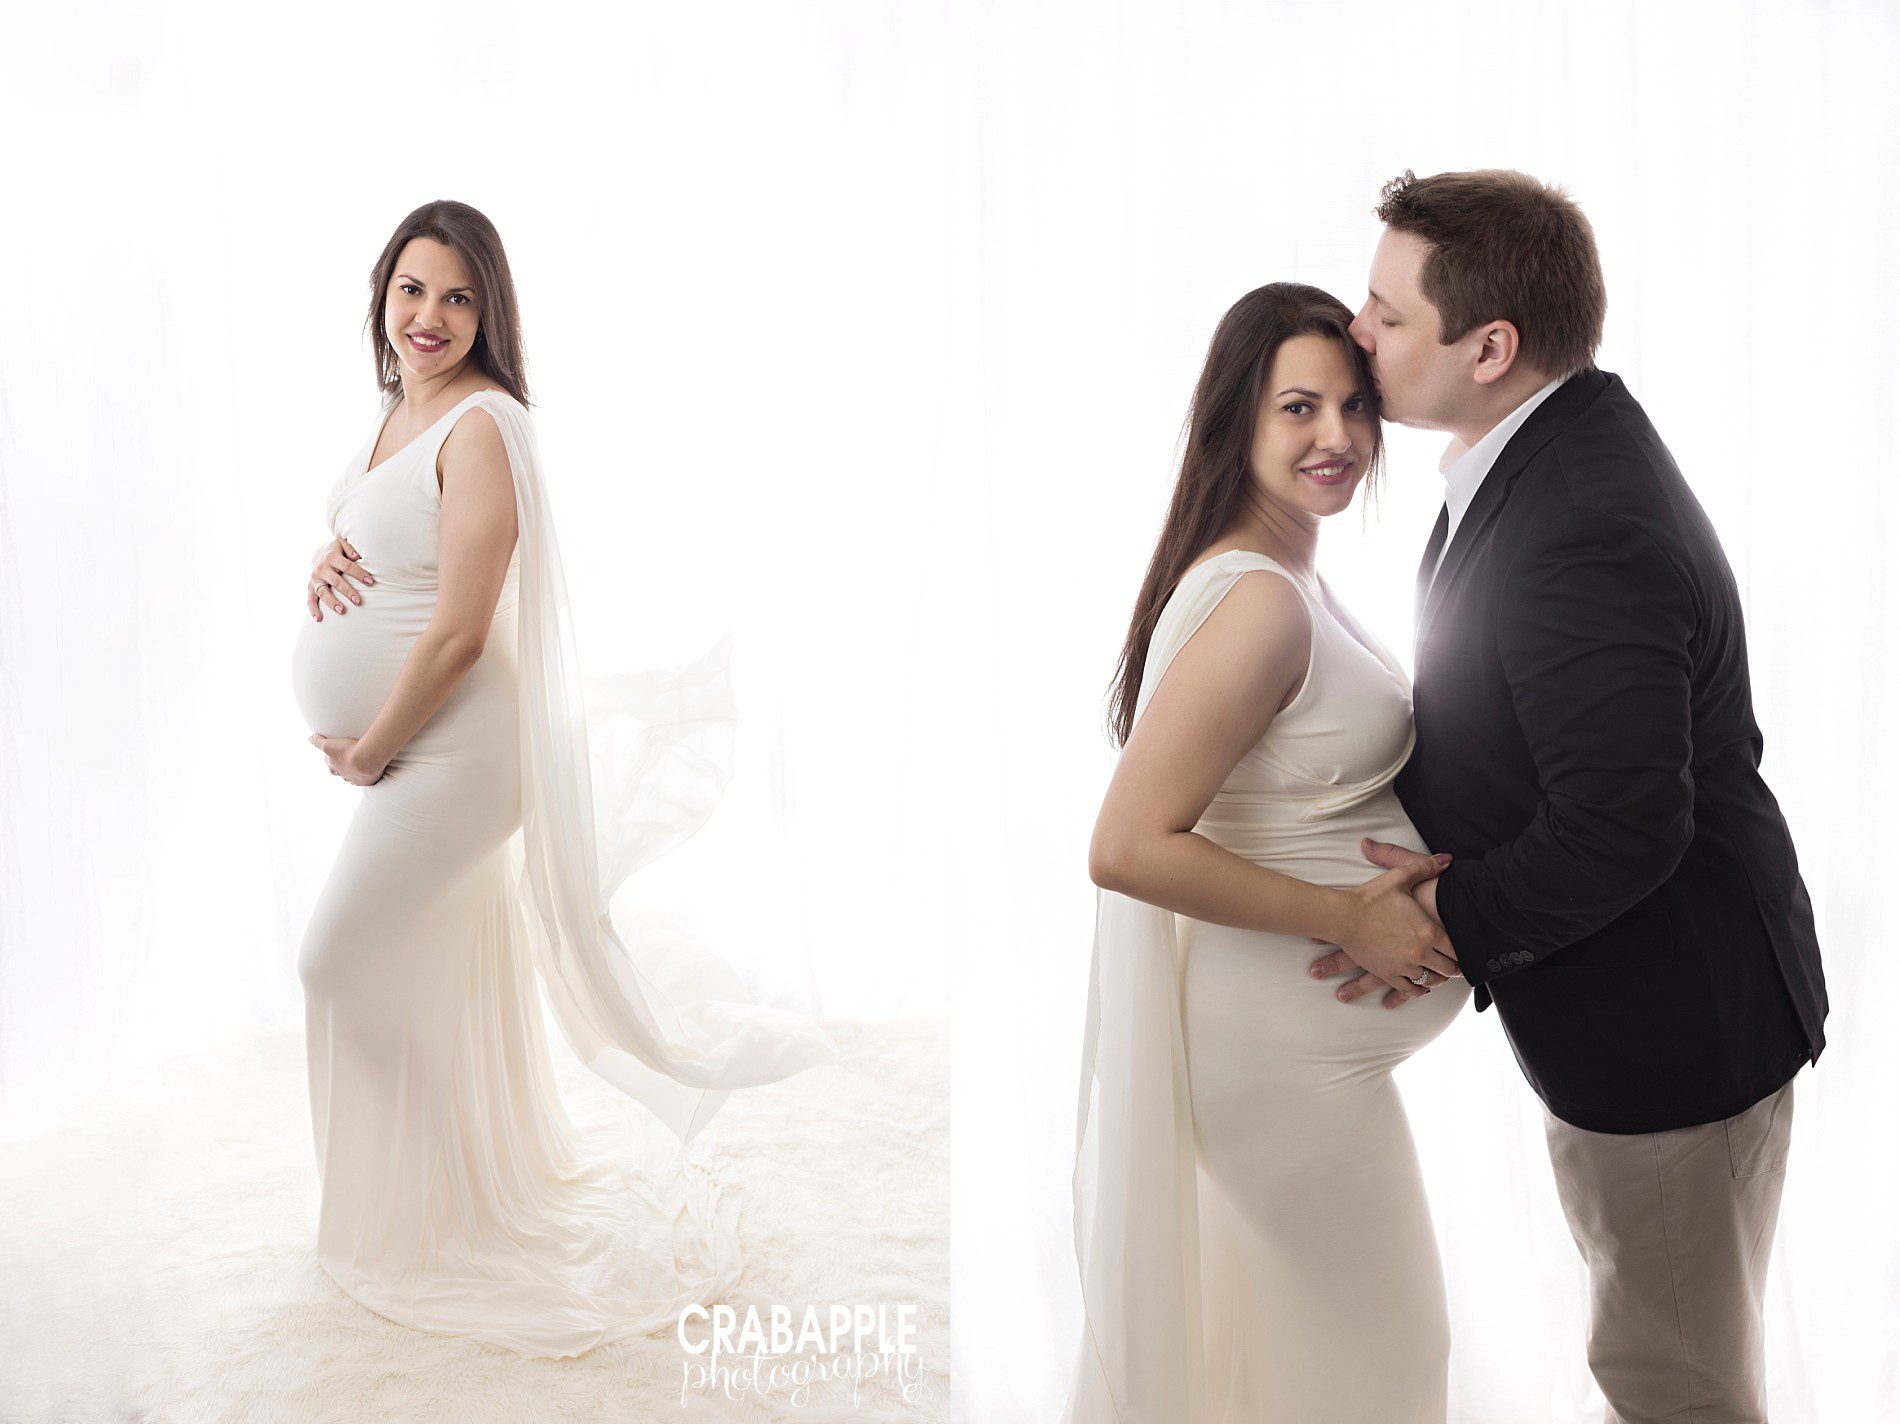 Stunning Maternity Portraits · Crabapple Photography